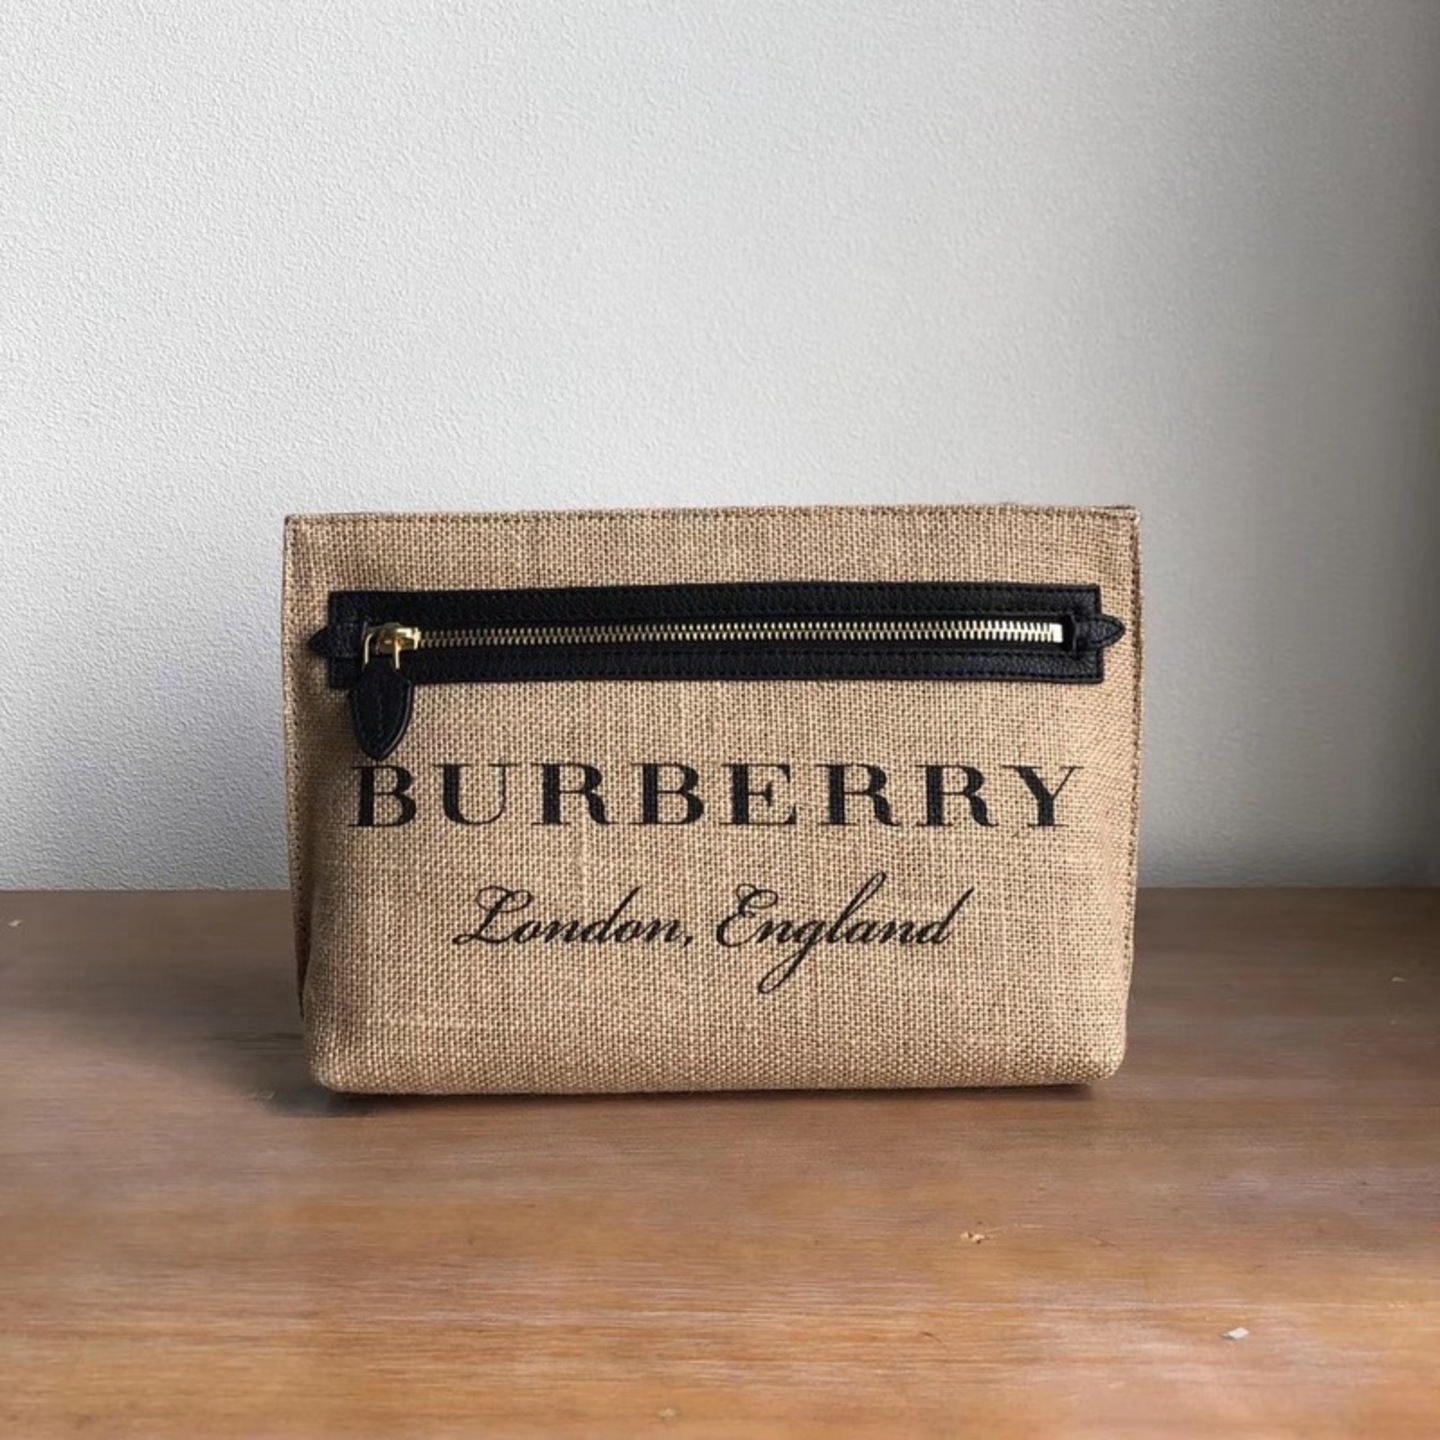 Burberry London England Mini Handbag